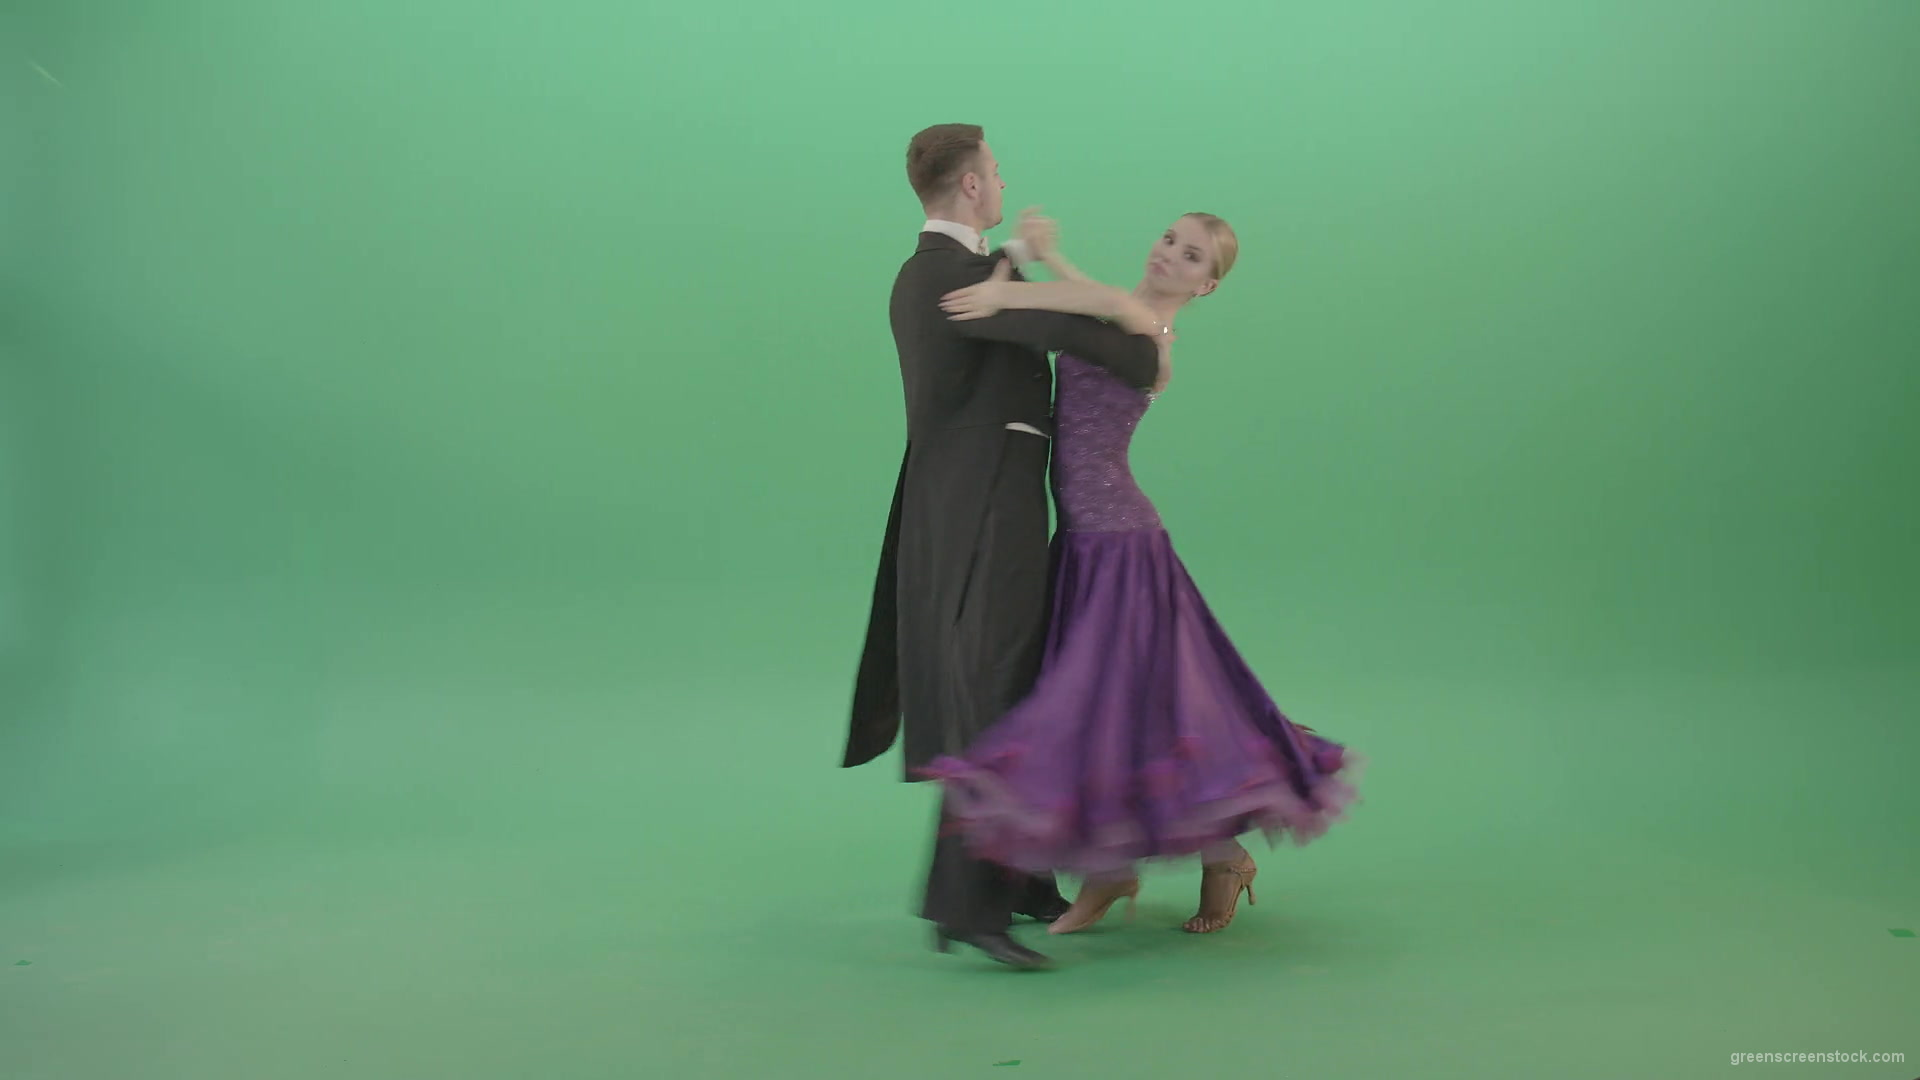 Ballroom-dancing-couple-spinning-щт-green-screen-in-Vienna-Waltz-Valse-4K-Video-Footage-1920_002 Green Screen Stock